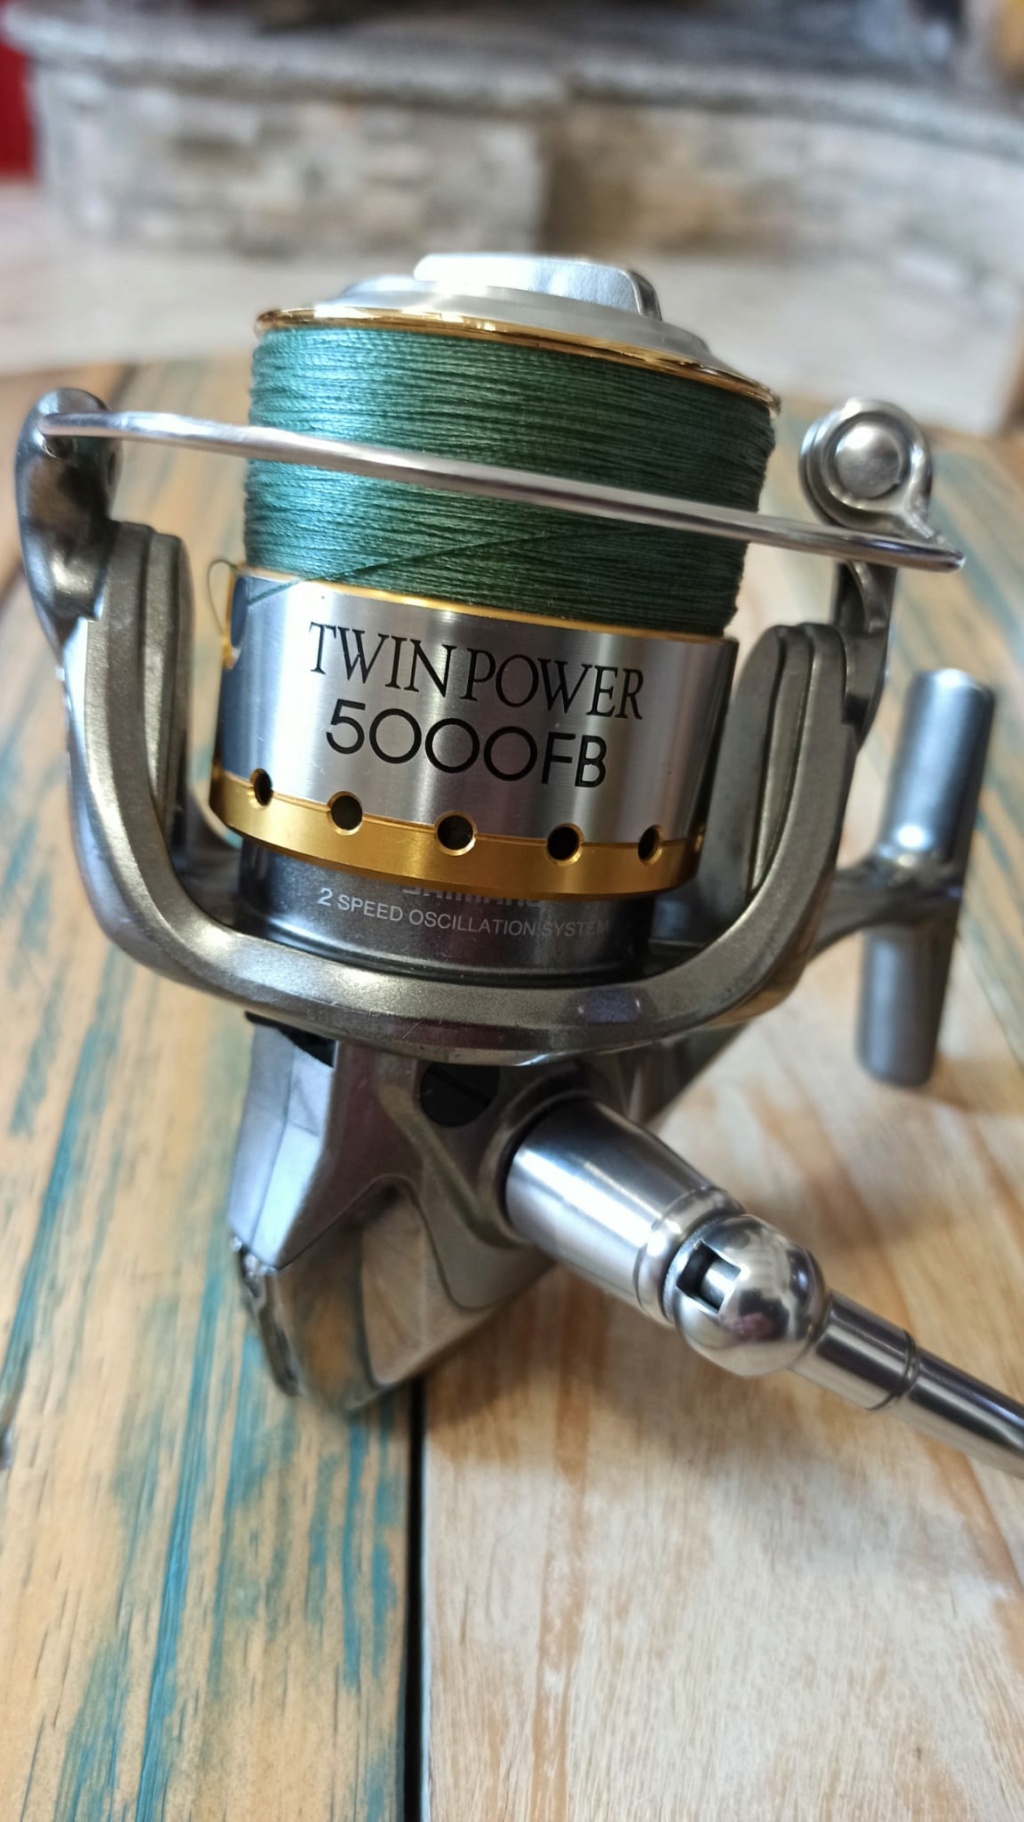 [Vendo] shimano twin power 5000 fb Img-2033